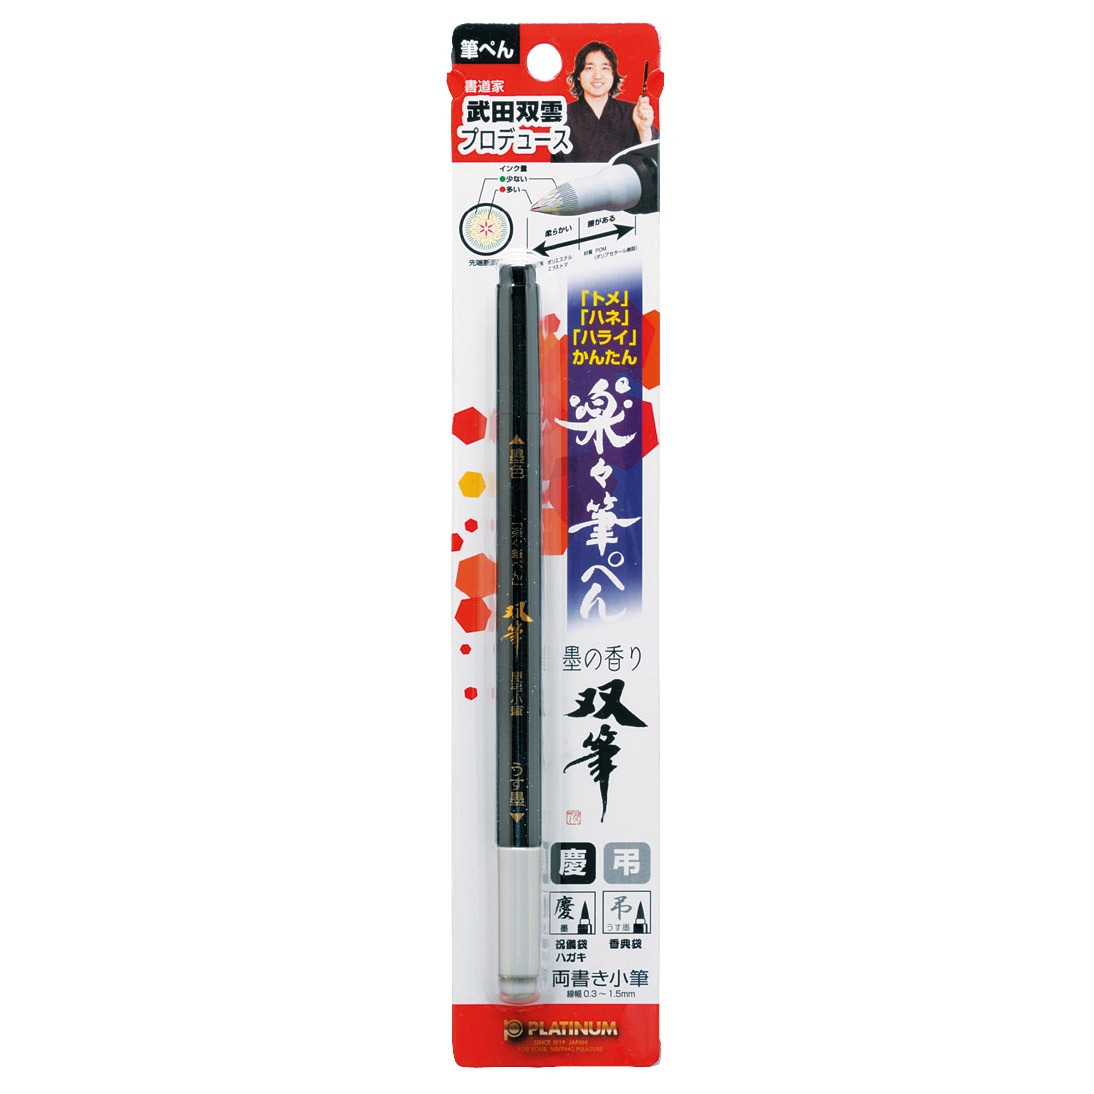 Souhitsu Twin CFSW-300 Brush pen in the group Pens / Artist Pens / Brush Pens at Pen Store (109771)